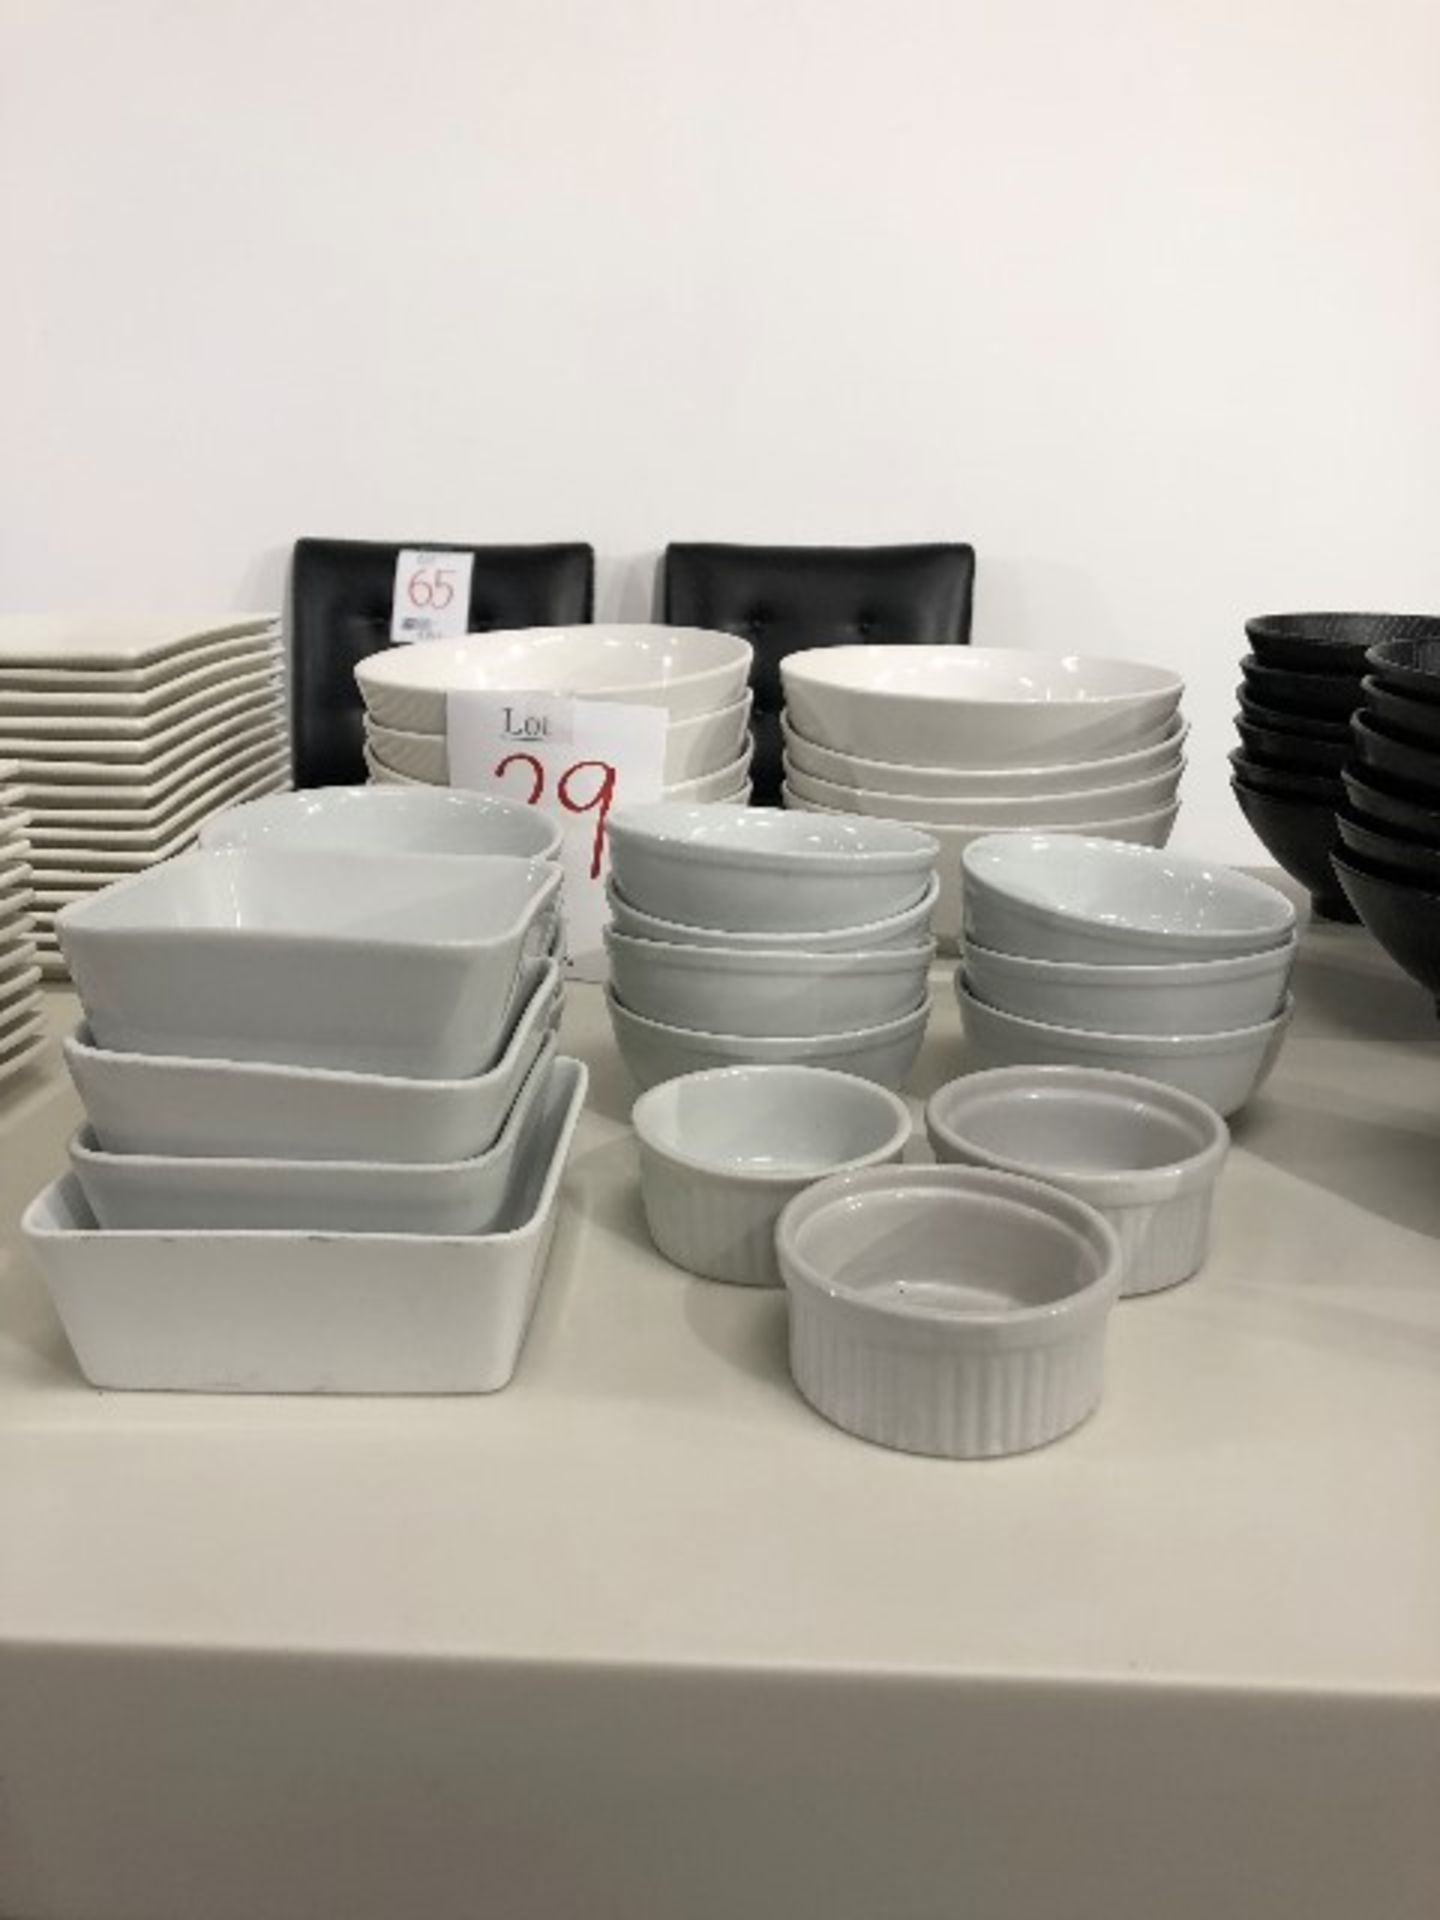 Assorted bowls, etc..., 18 pcs (Lot)